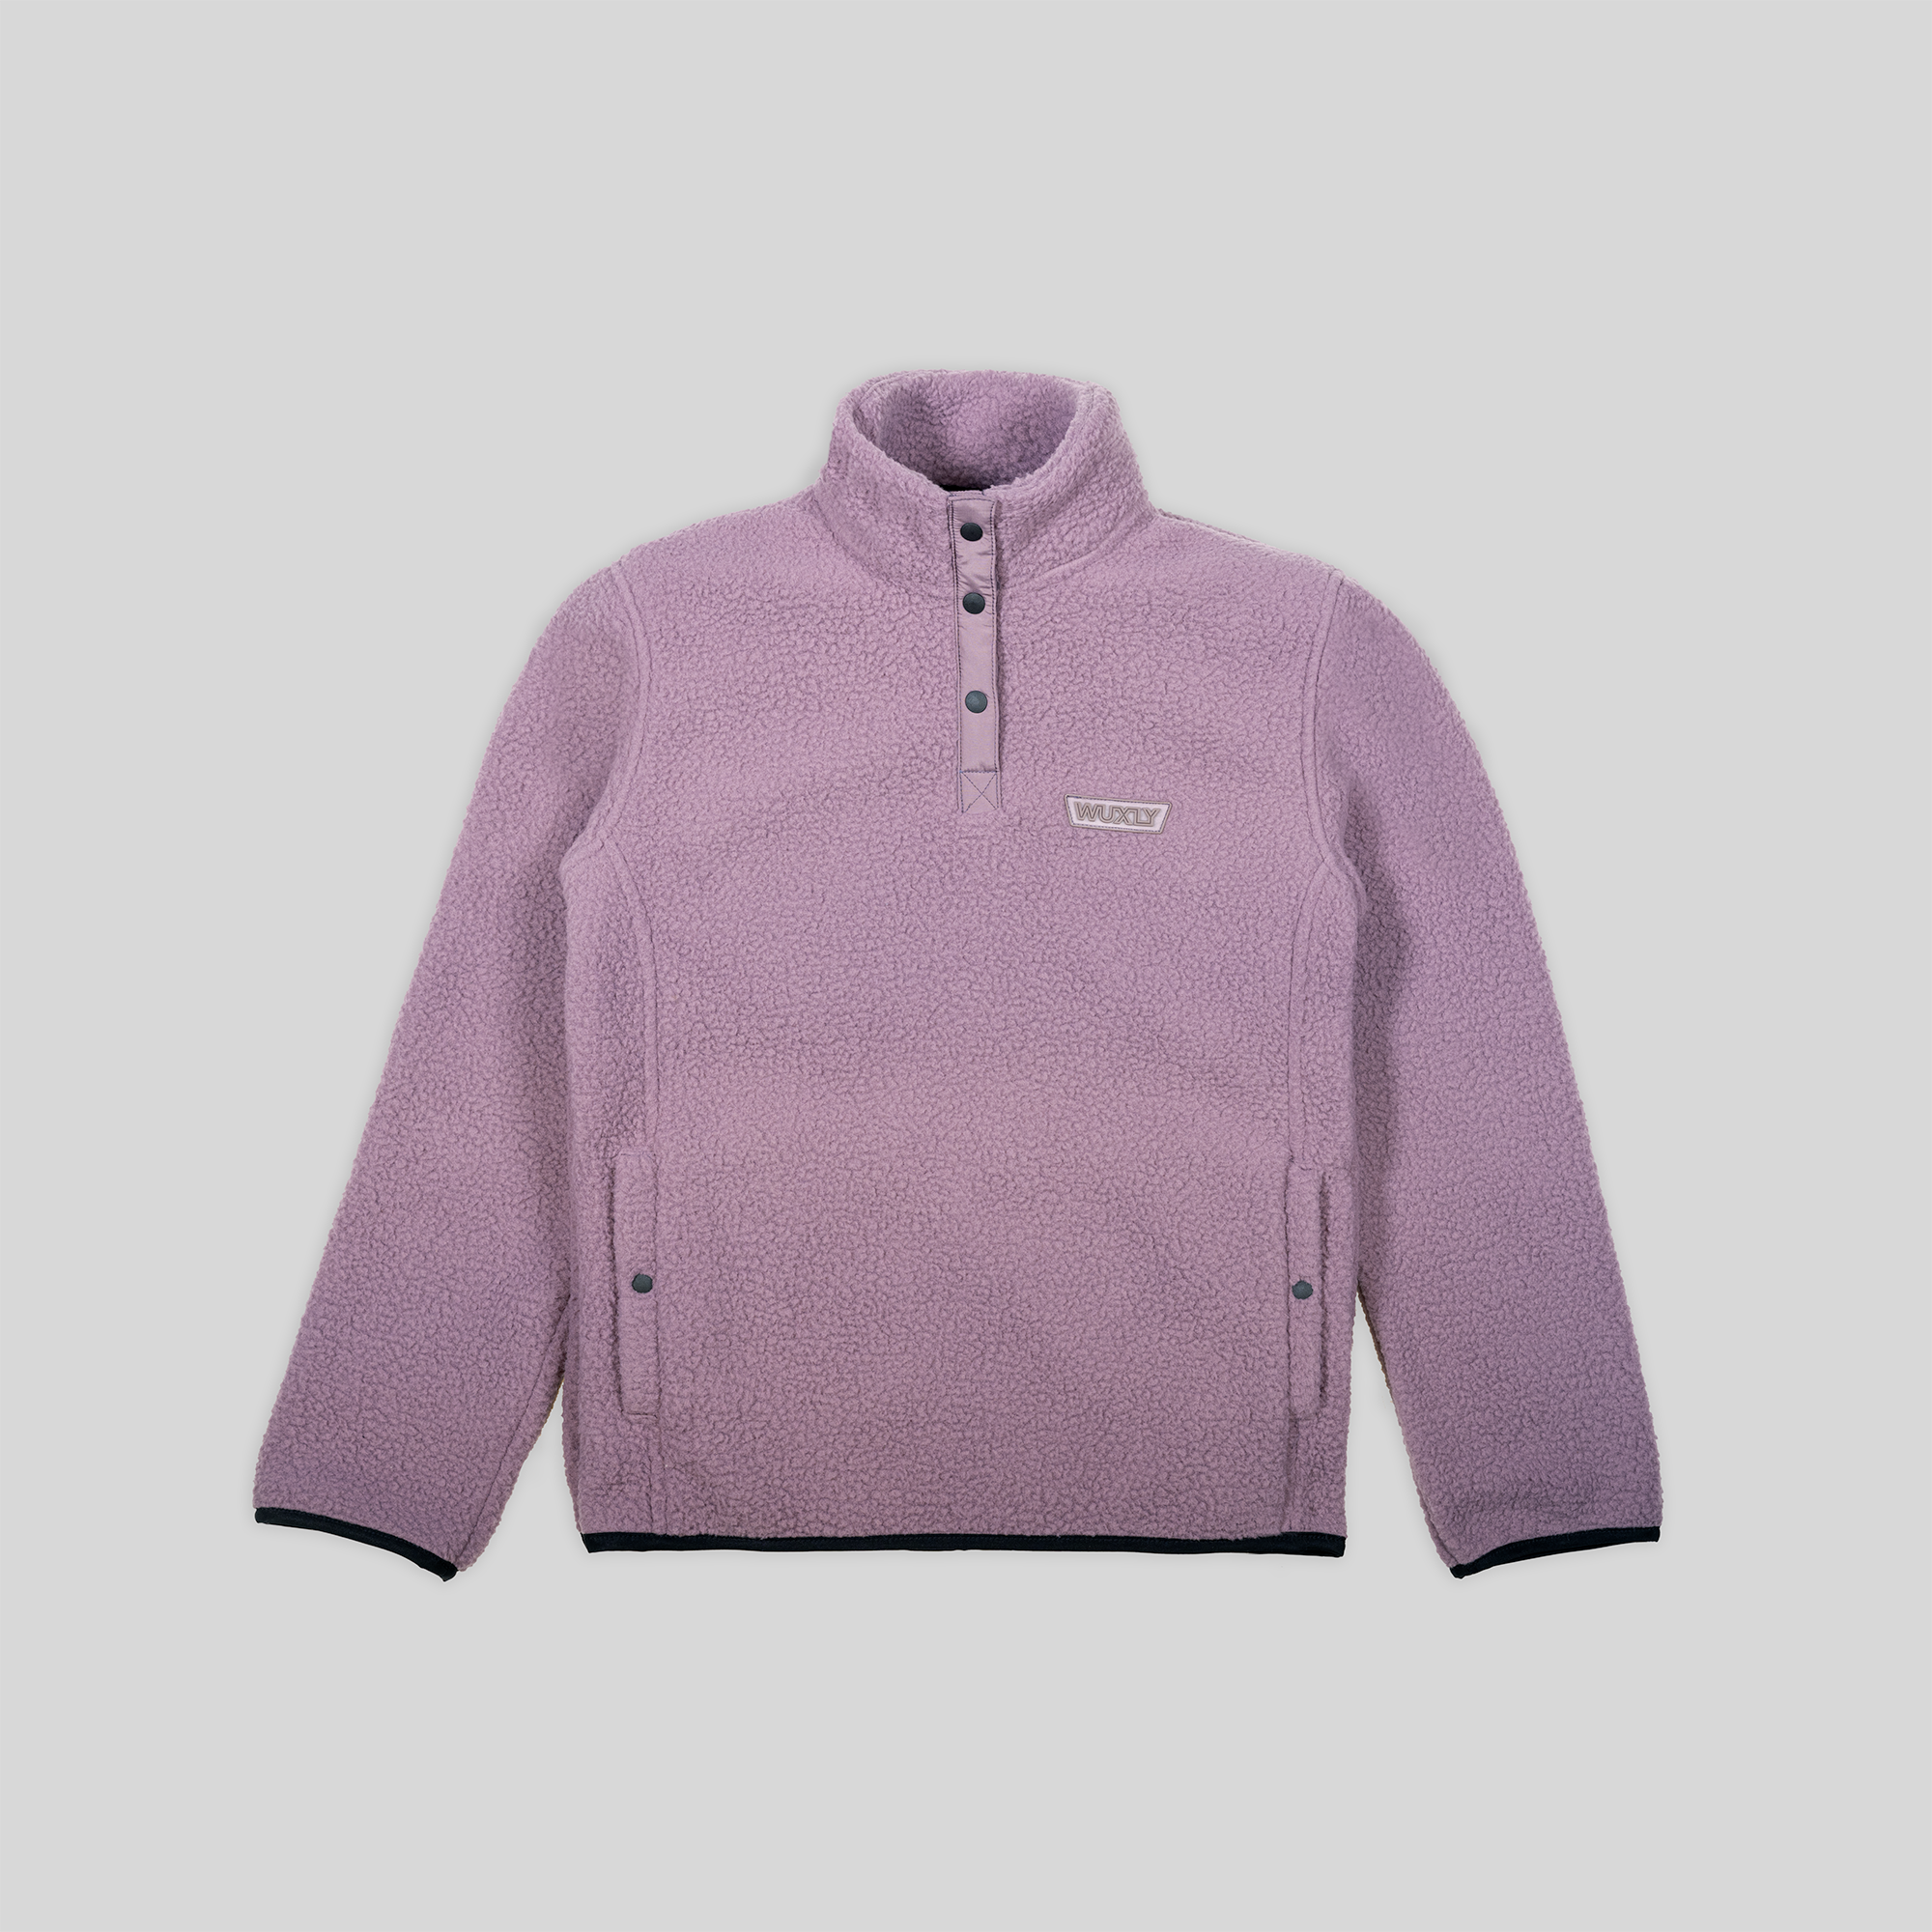 Fleeces, Fleece Meaning, Fleece Jacket, Fleece Material, purple